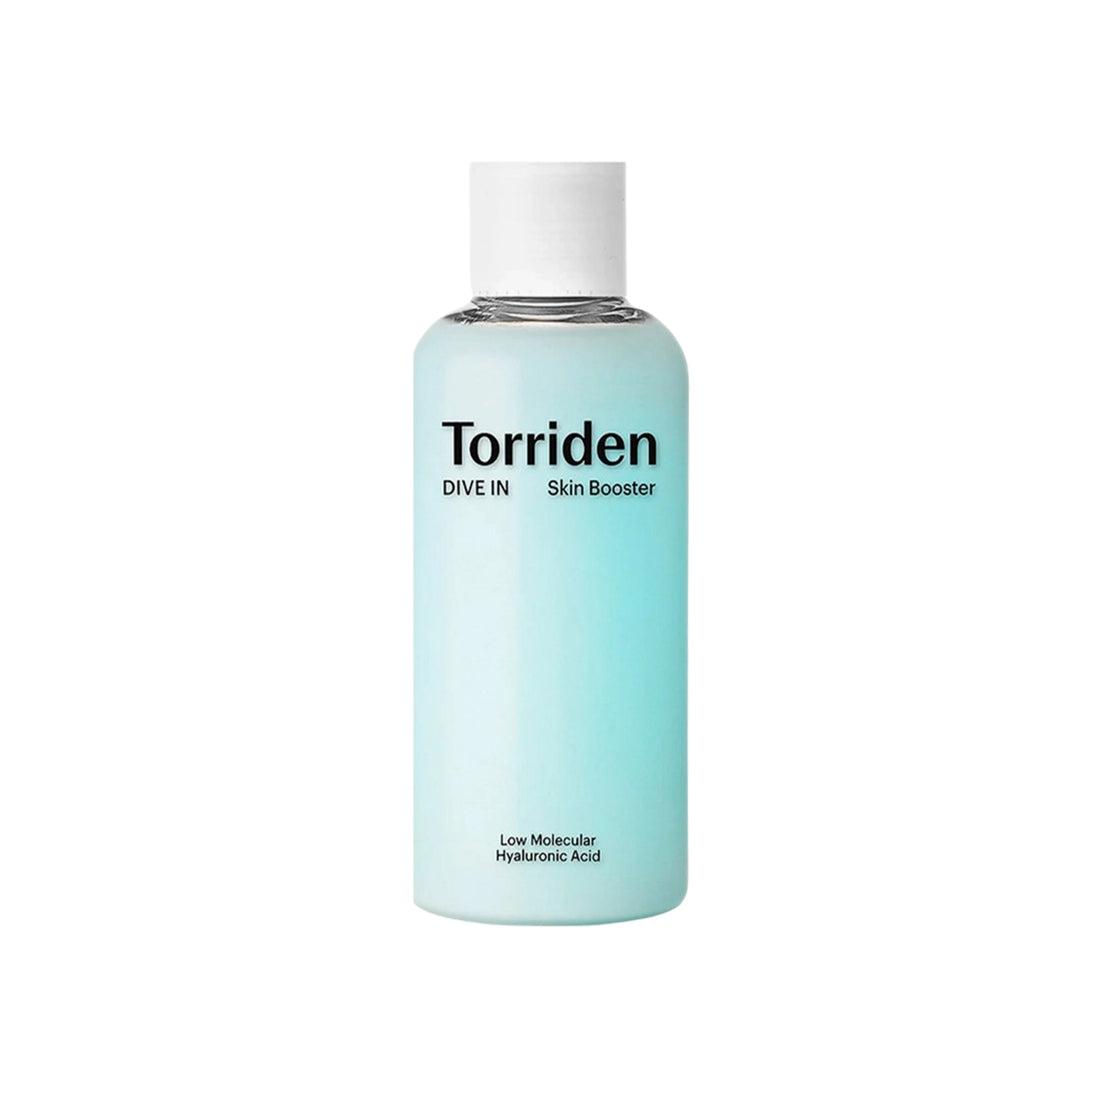 Torriden Dive in Low Molecular Hyaluronic Acid Skin Booster